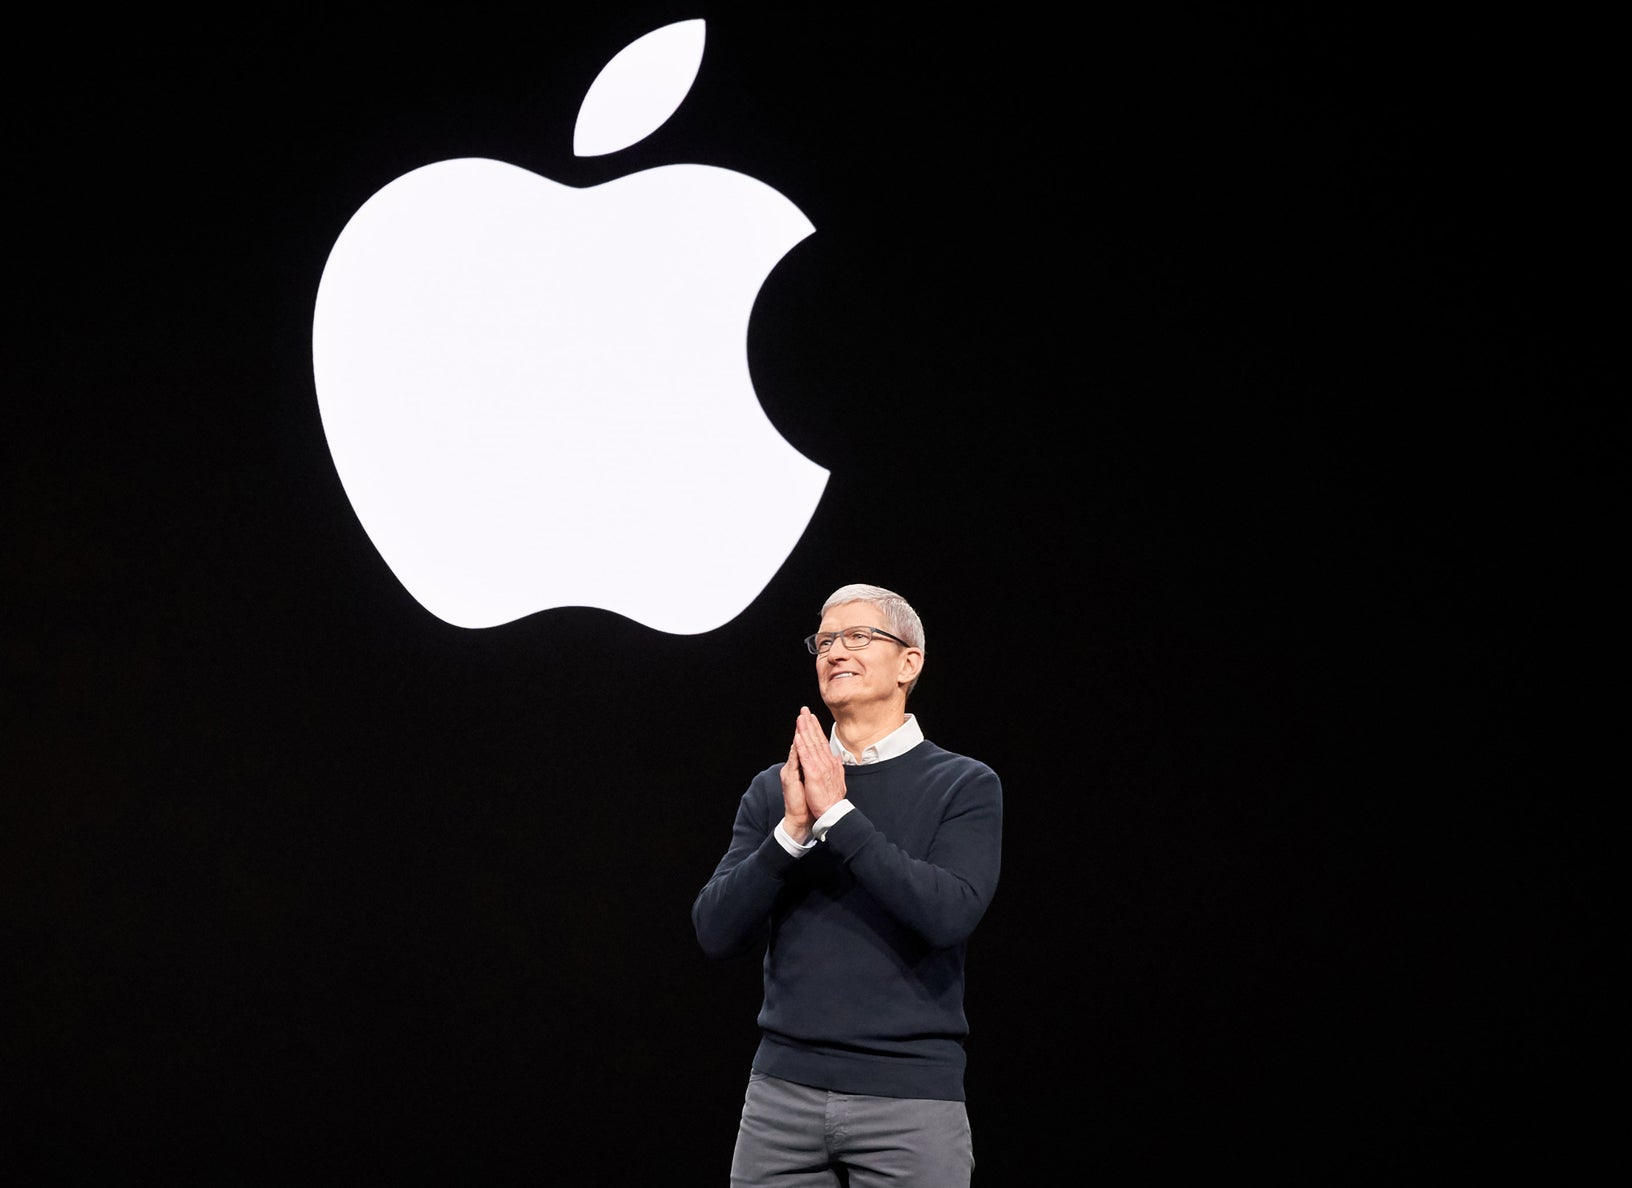 Apple: Εγείρει ερωτήματα σχετικά με τα σχέδιά της για την ηλεκτροκίνηση